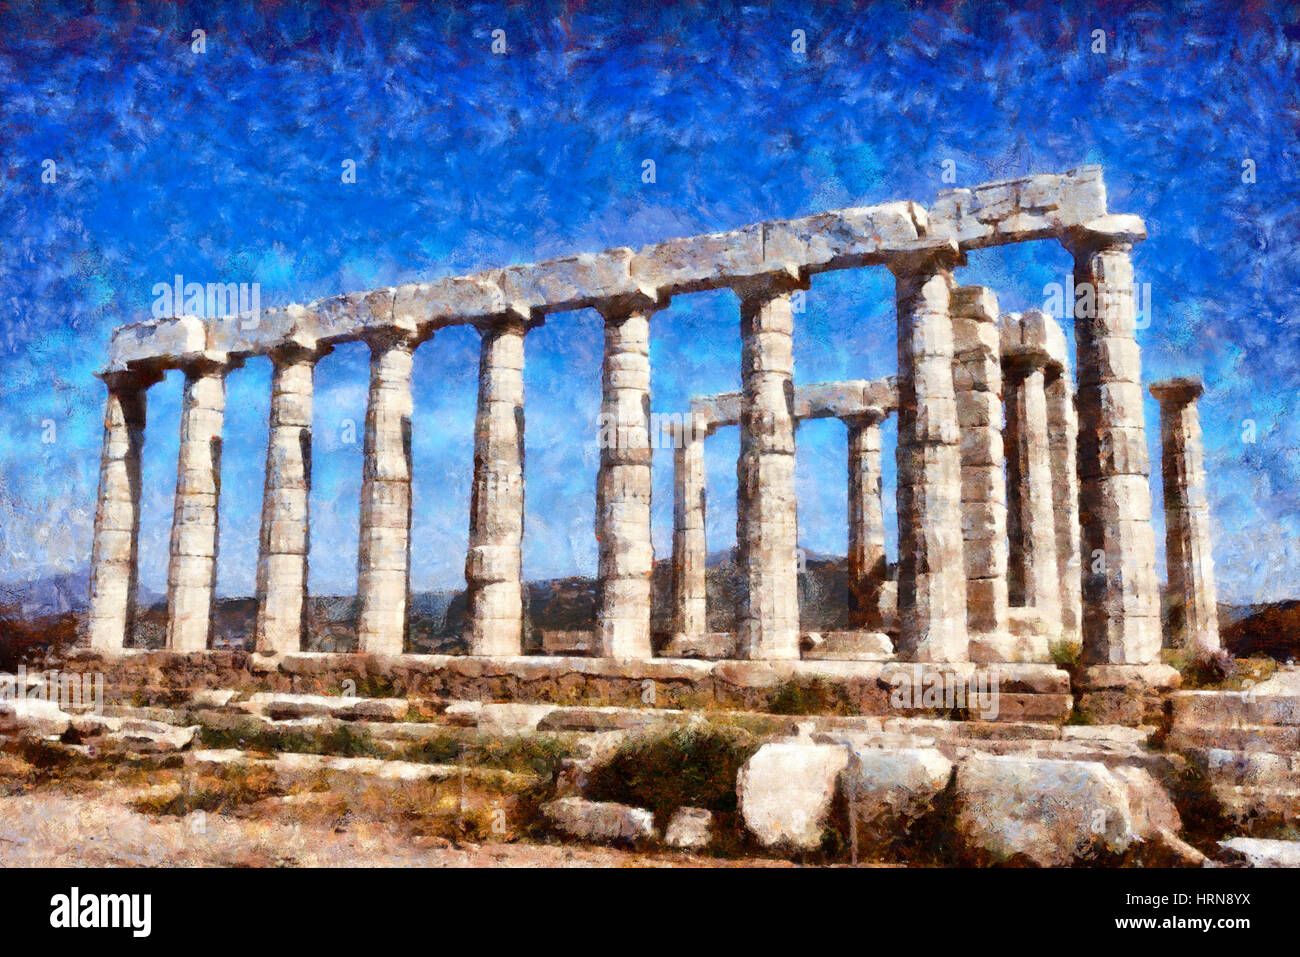 Poseidontempel in Kap Sounion, Griechenland Stockfotografie - Alamy